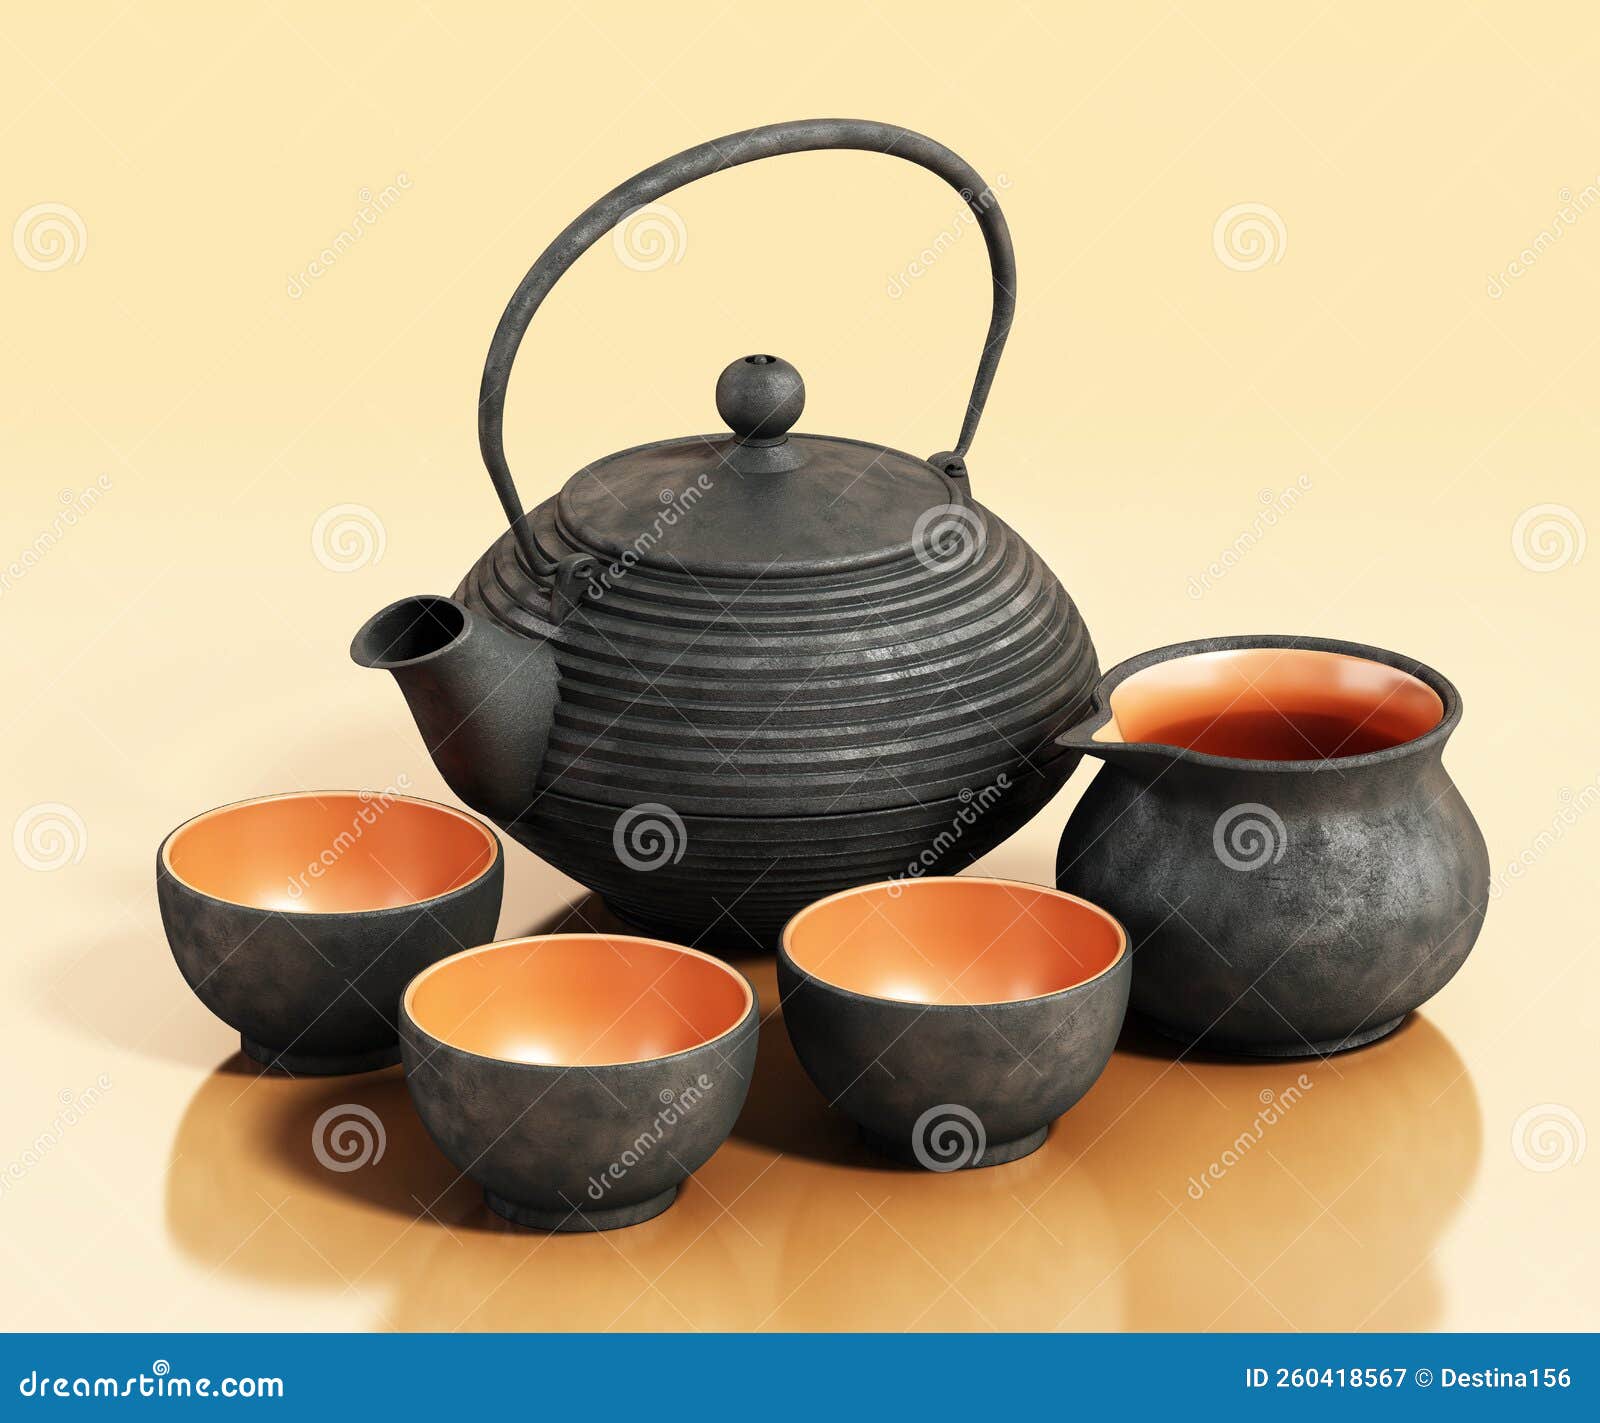 37,290 imágenes, fotos de stock, objetos en 3D y vectores sobre Cartoon  teapot